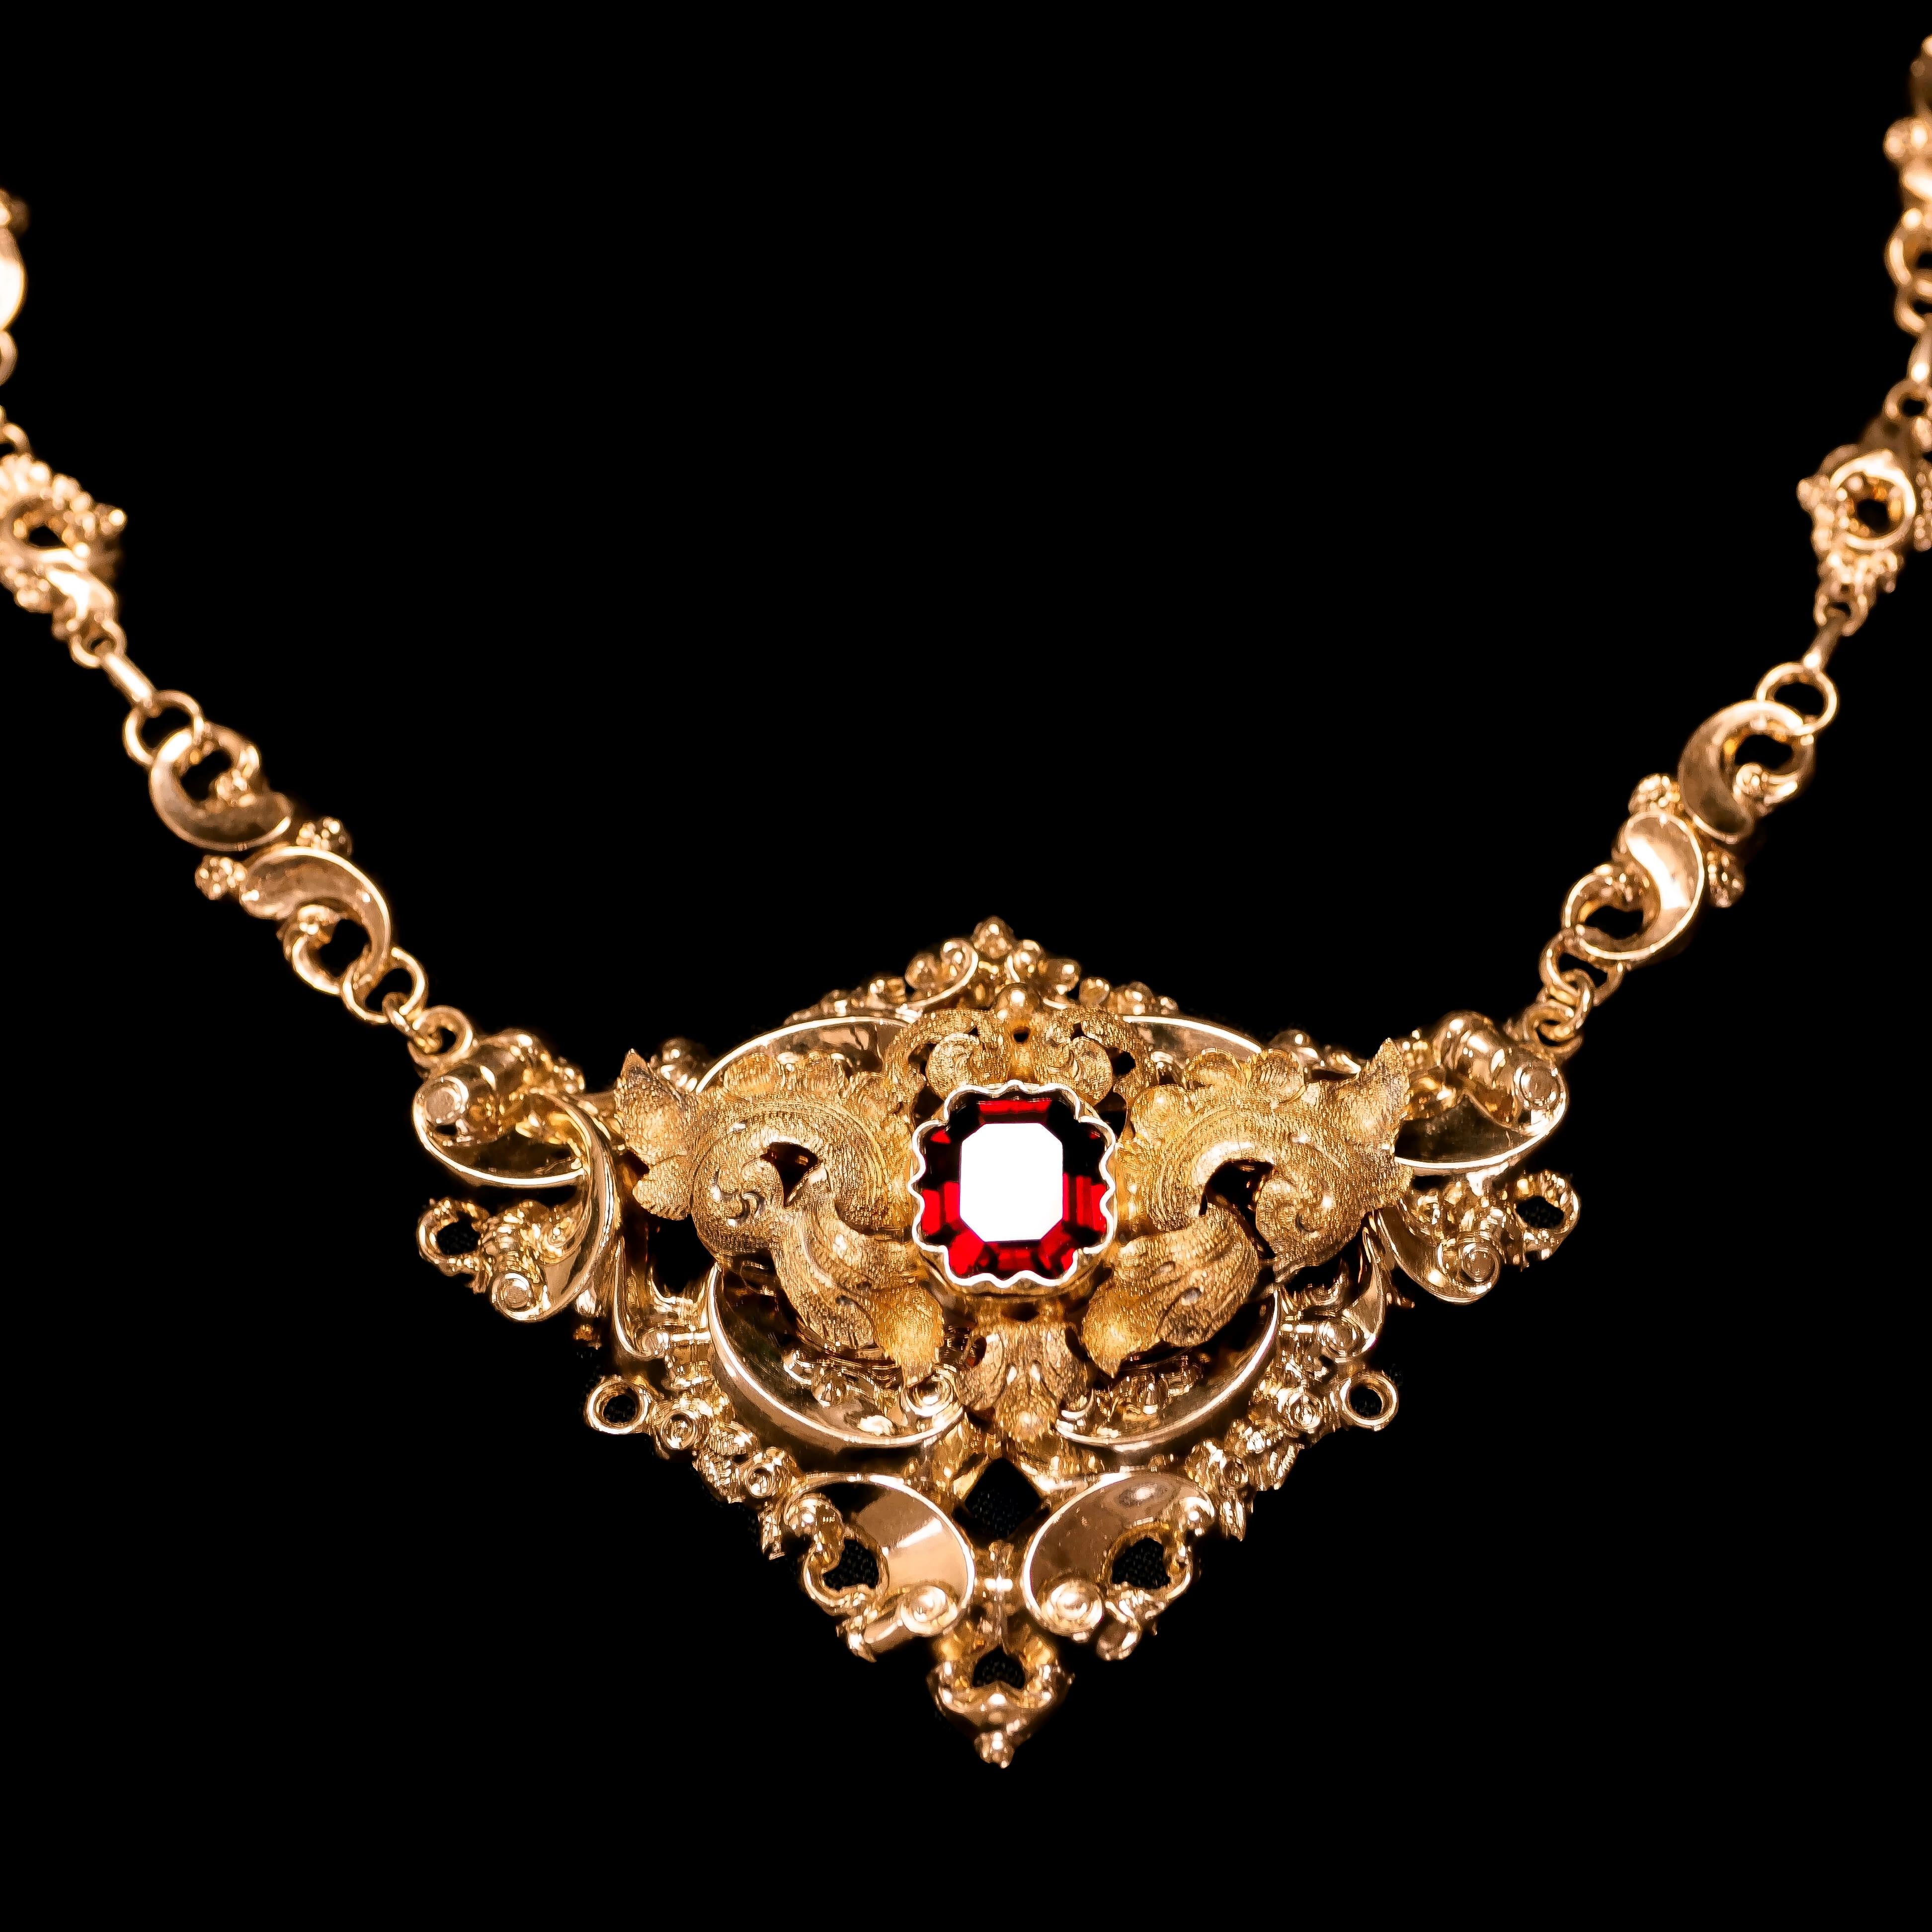 Women's or Men's Antique Victorian 18K Gold Garnet Necklace in Baroque Revival Style, c.1840